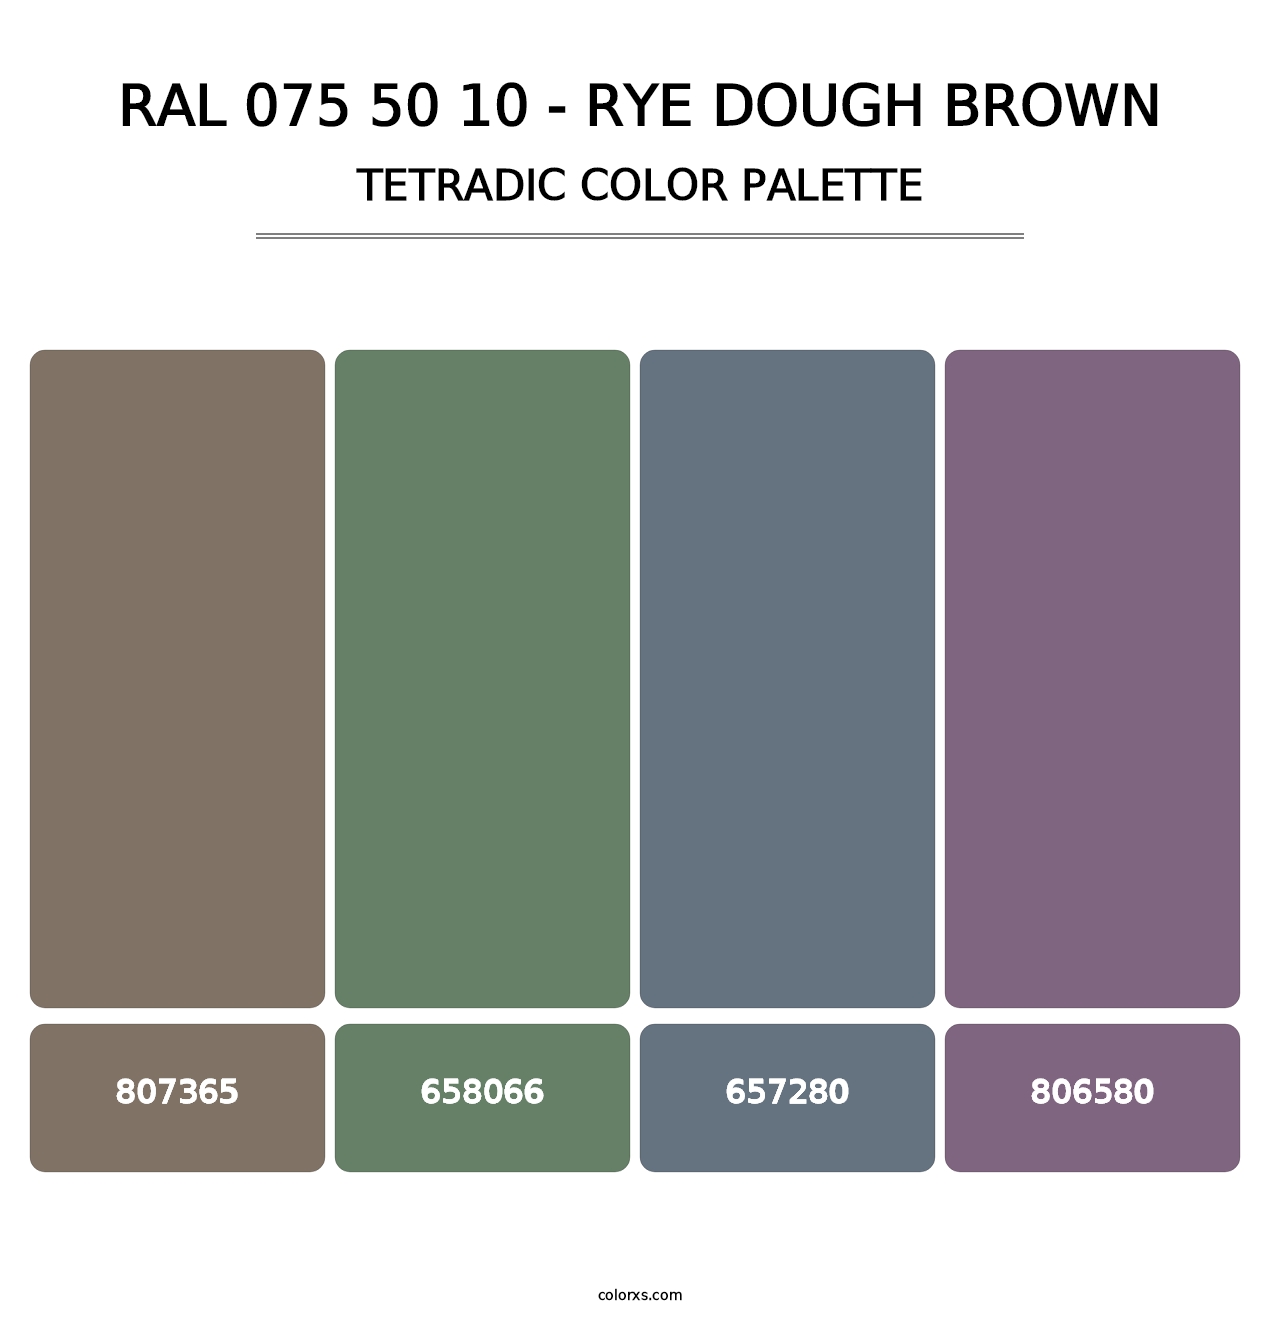 RAL 075 50 10 - Rye Dough Brown - Tetradic Color Palette